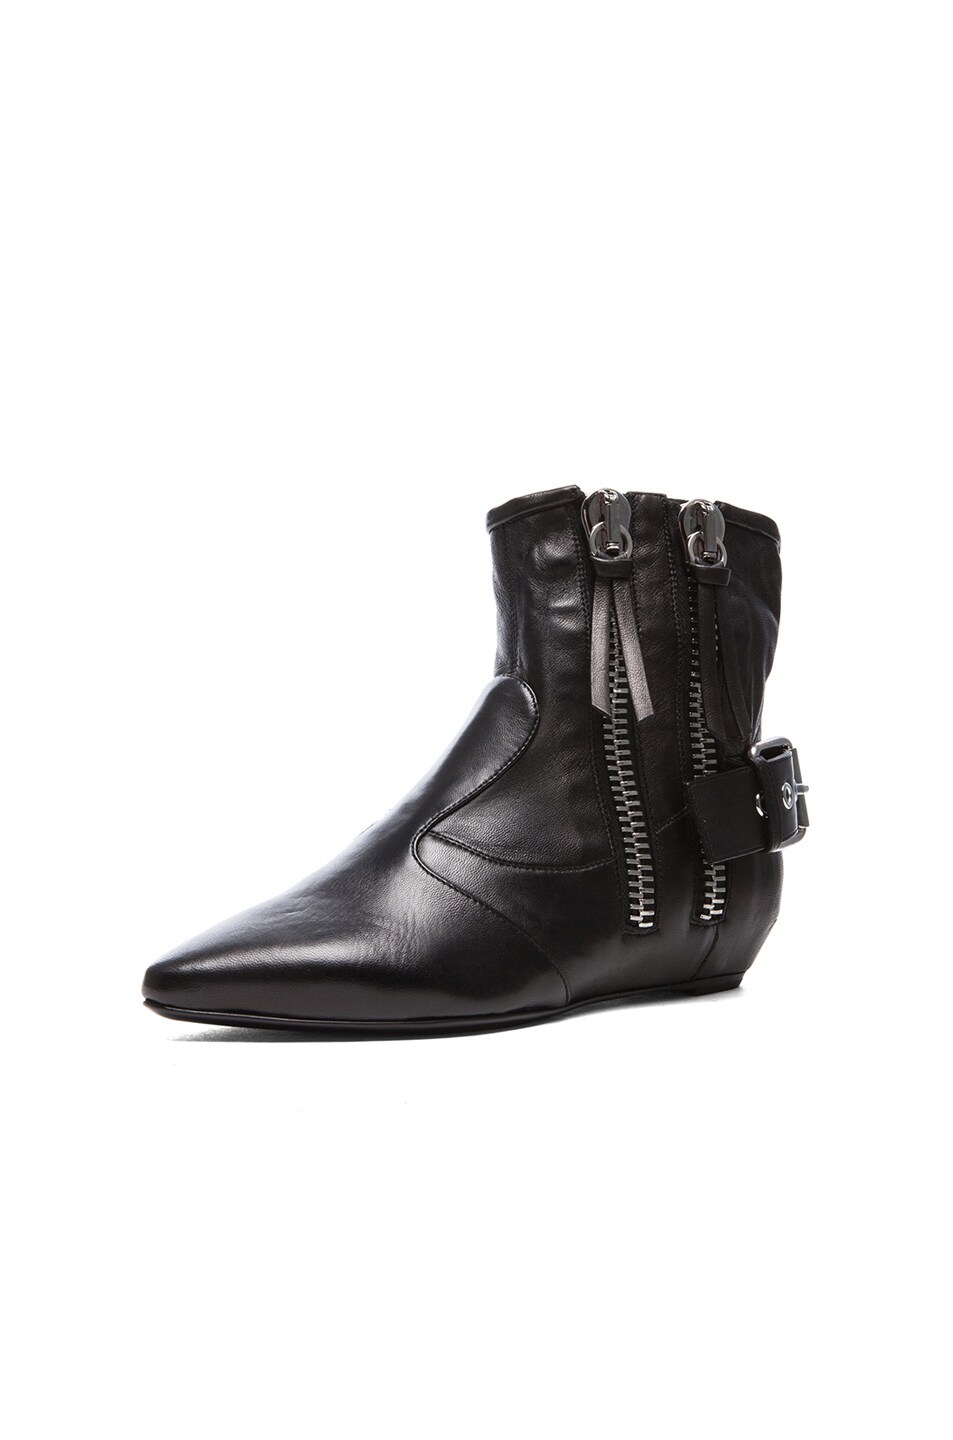 Giuseppe Zanotti Maude Leather Boots in Black | FWRD